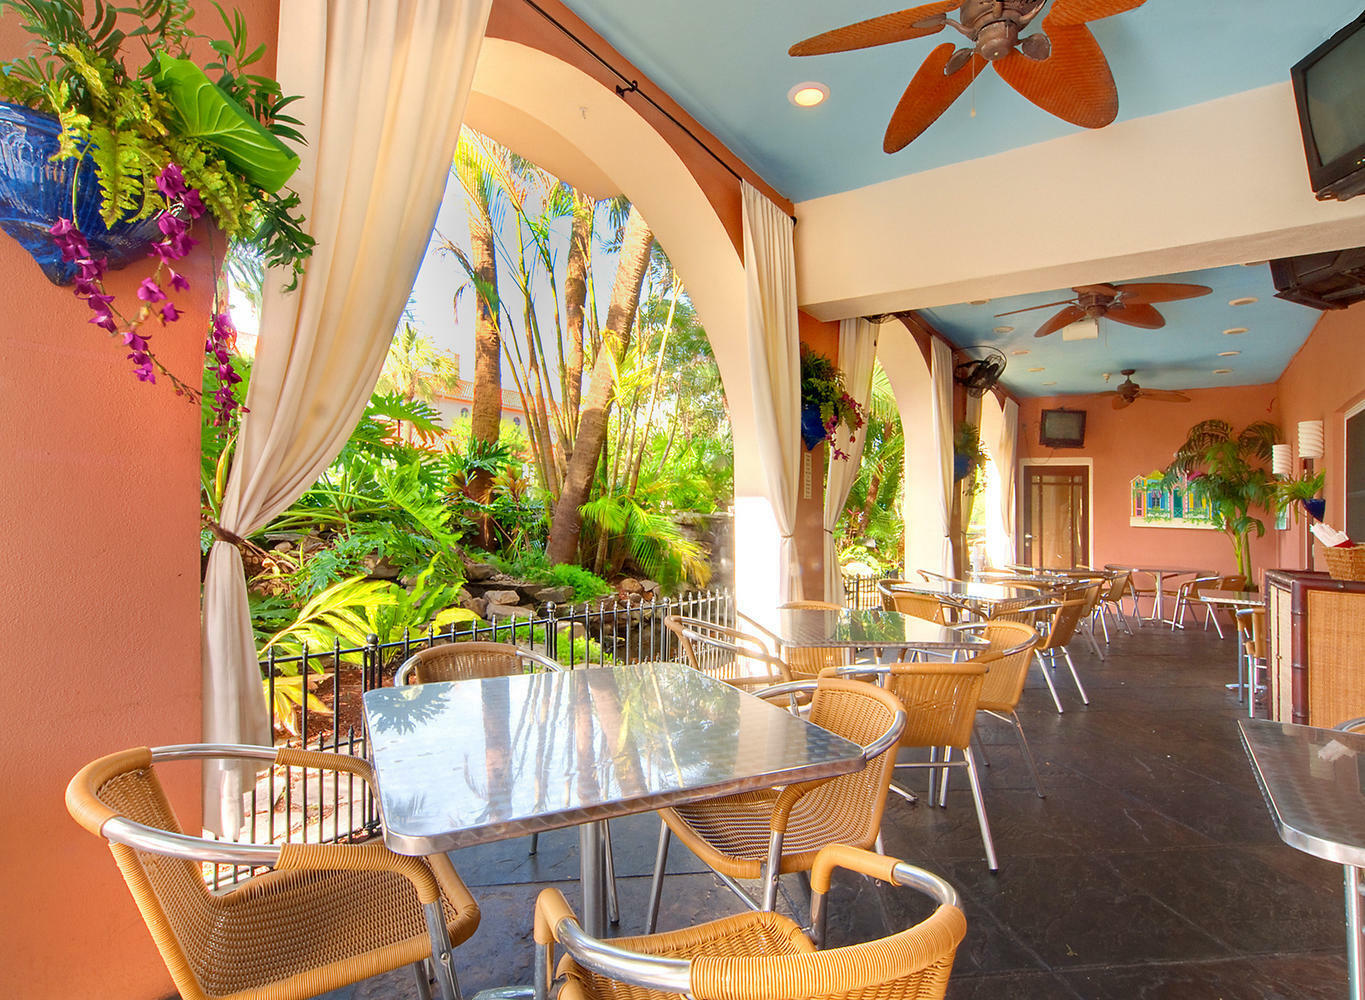 Photo of Tahitian Inn, Tampa, FL